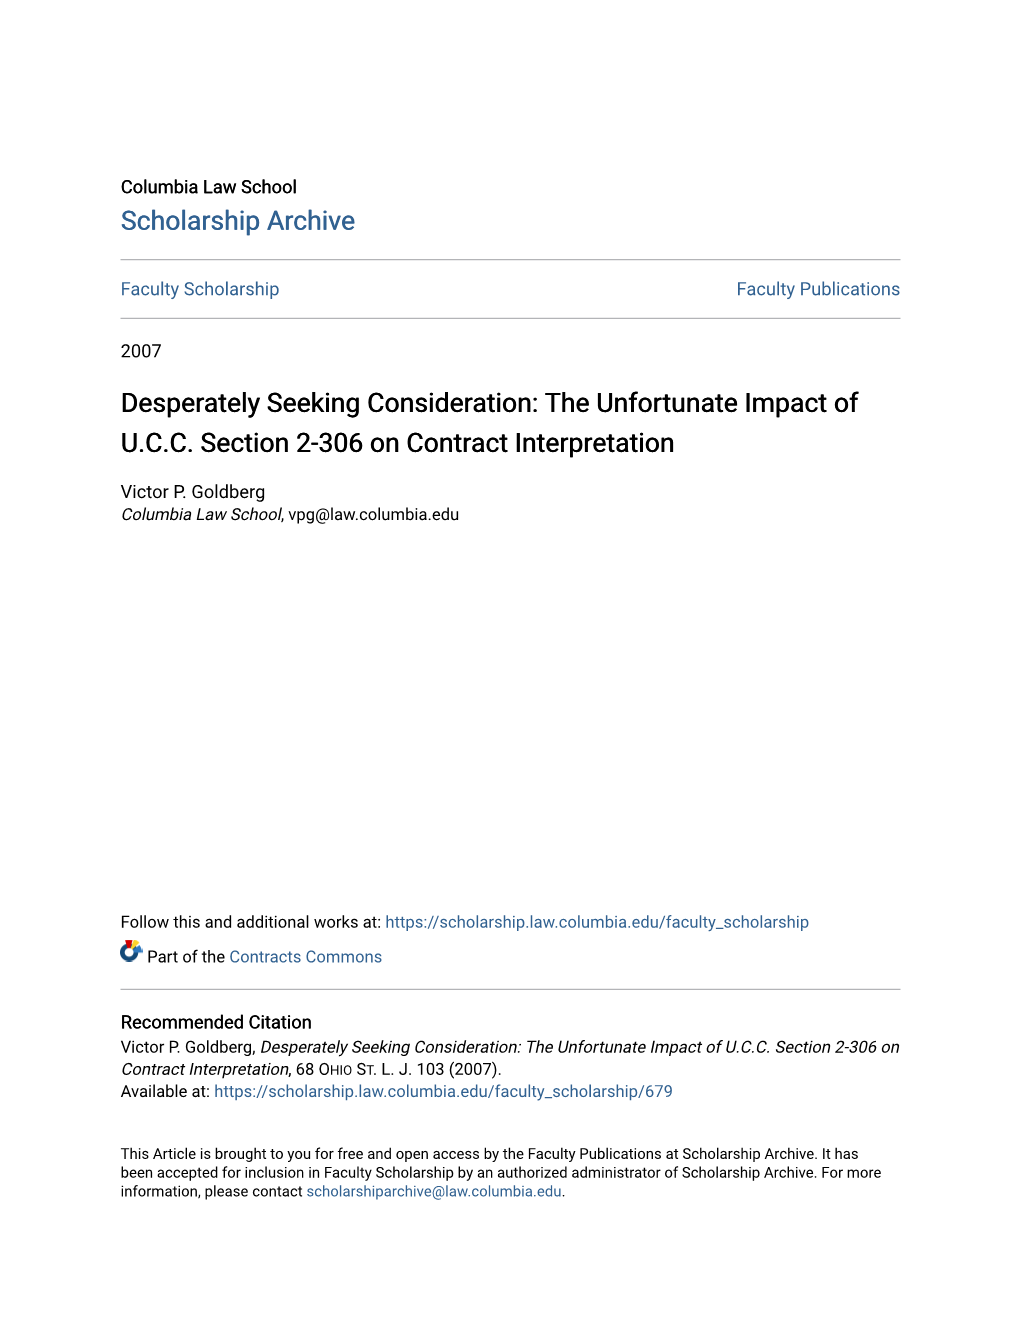 Desperately Seeking Consideration: the Unfortunate Impact of U.C.C. Section 2-306 on Contract Interpretation